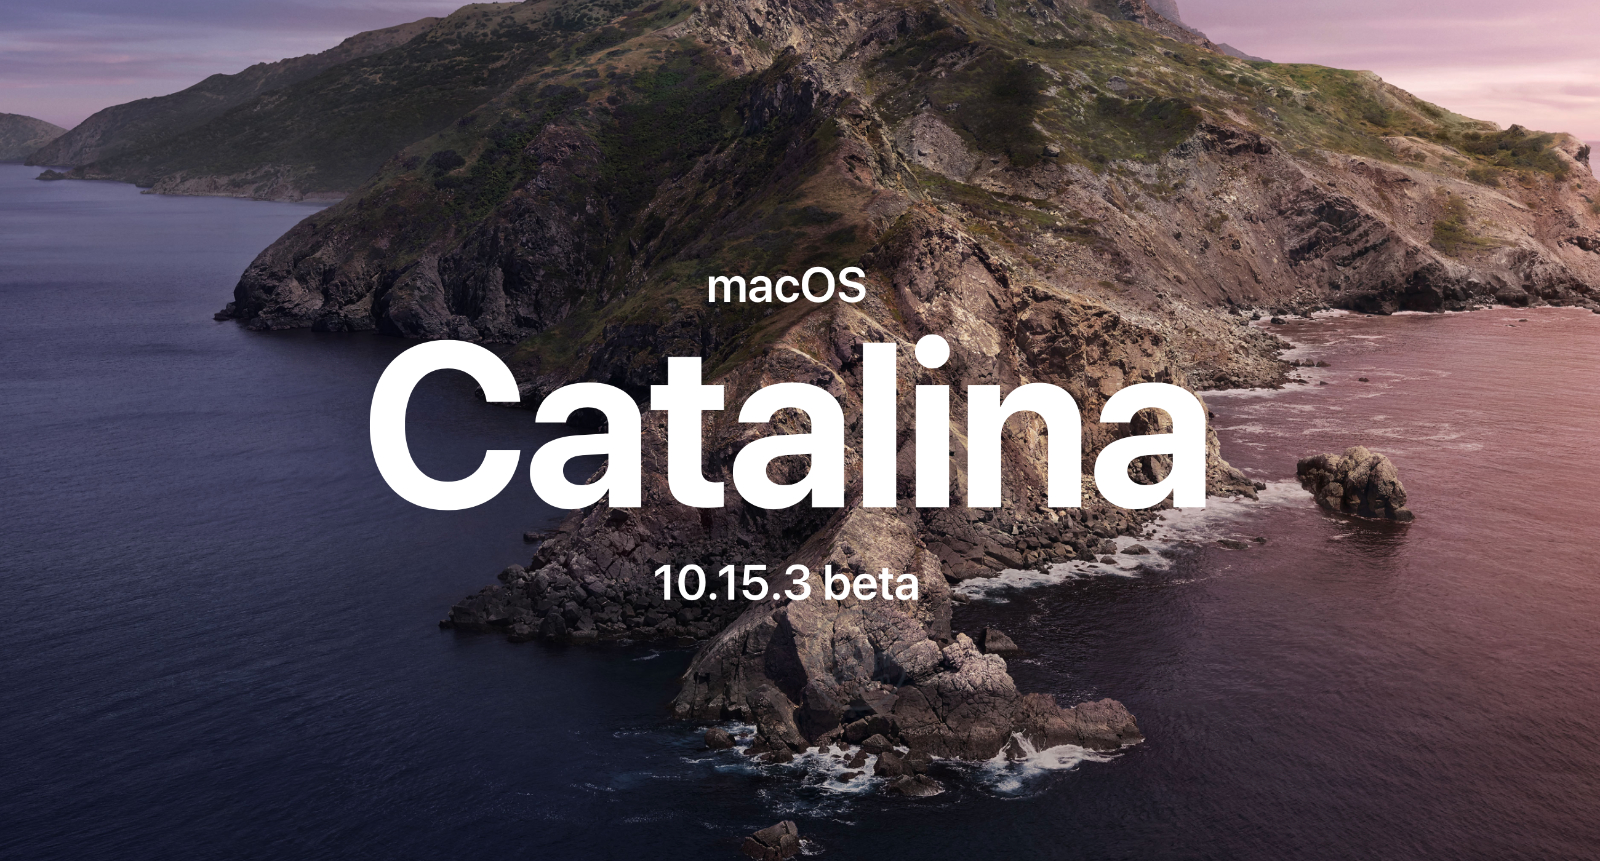 macOS Catalina 10.15.3 beta